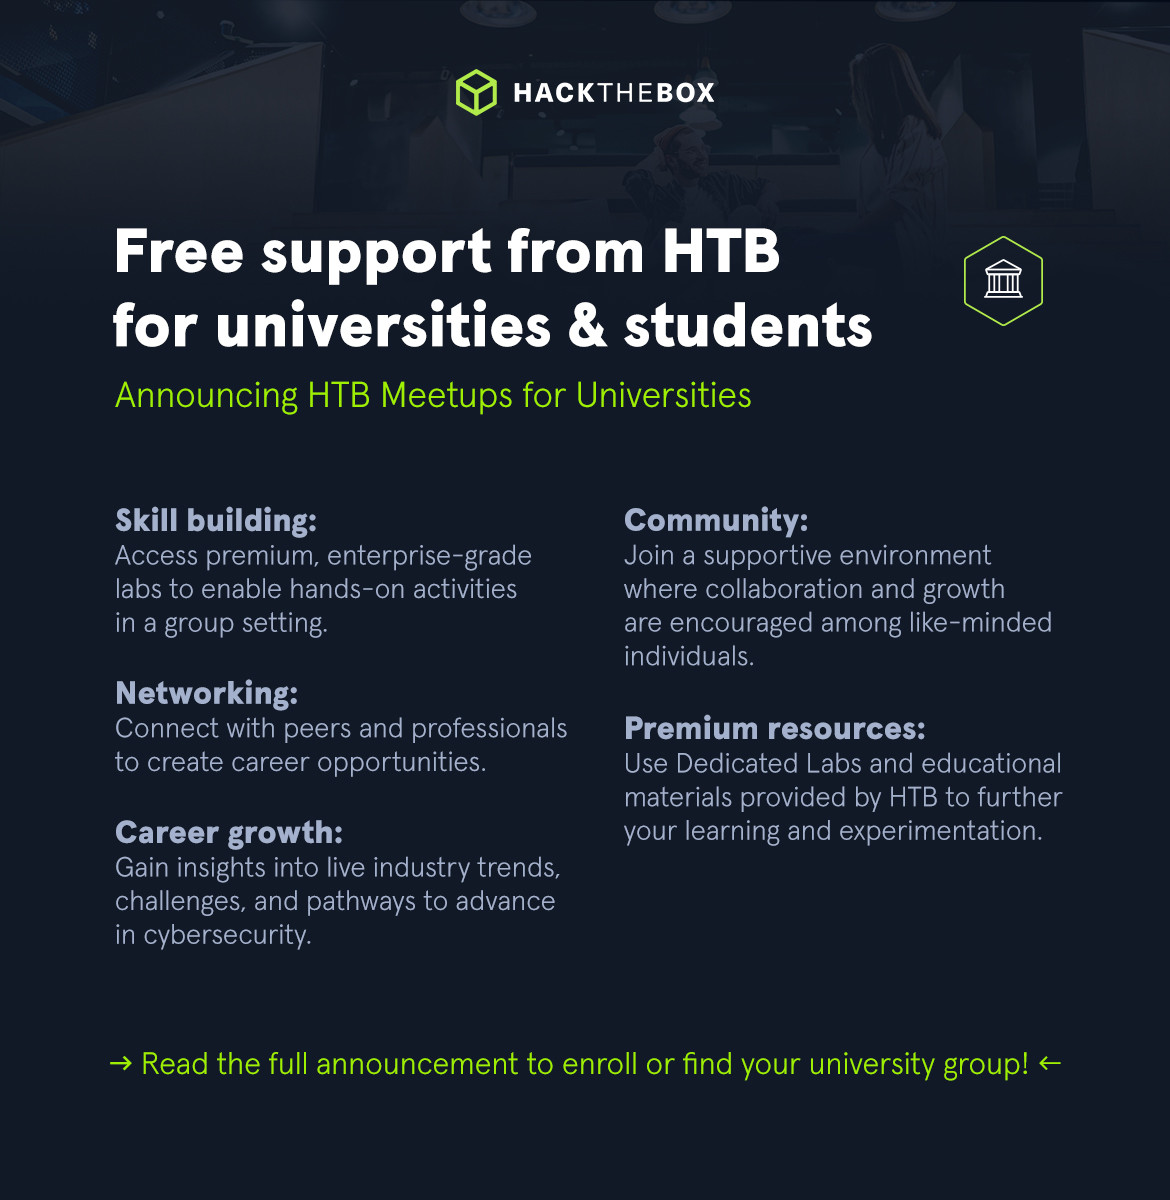 HTB meetups for universities